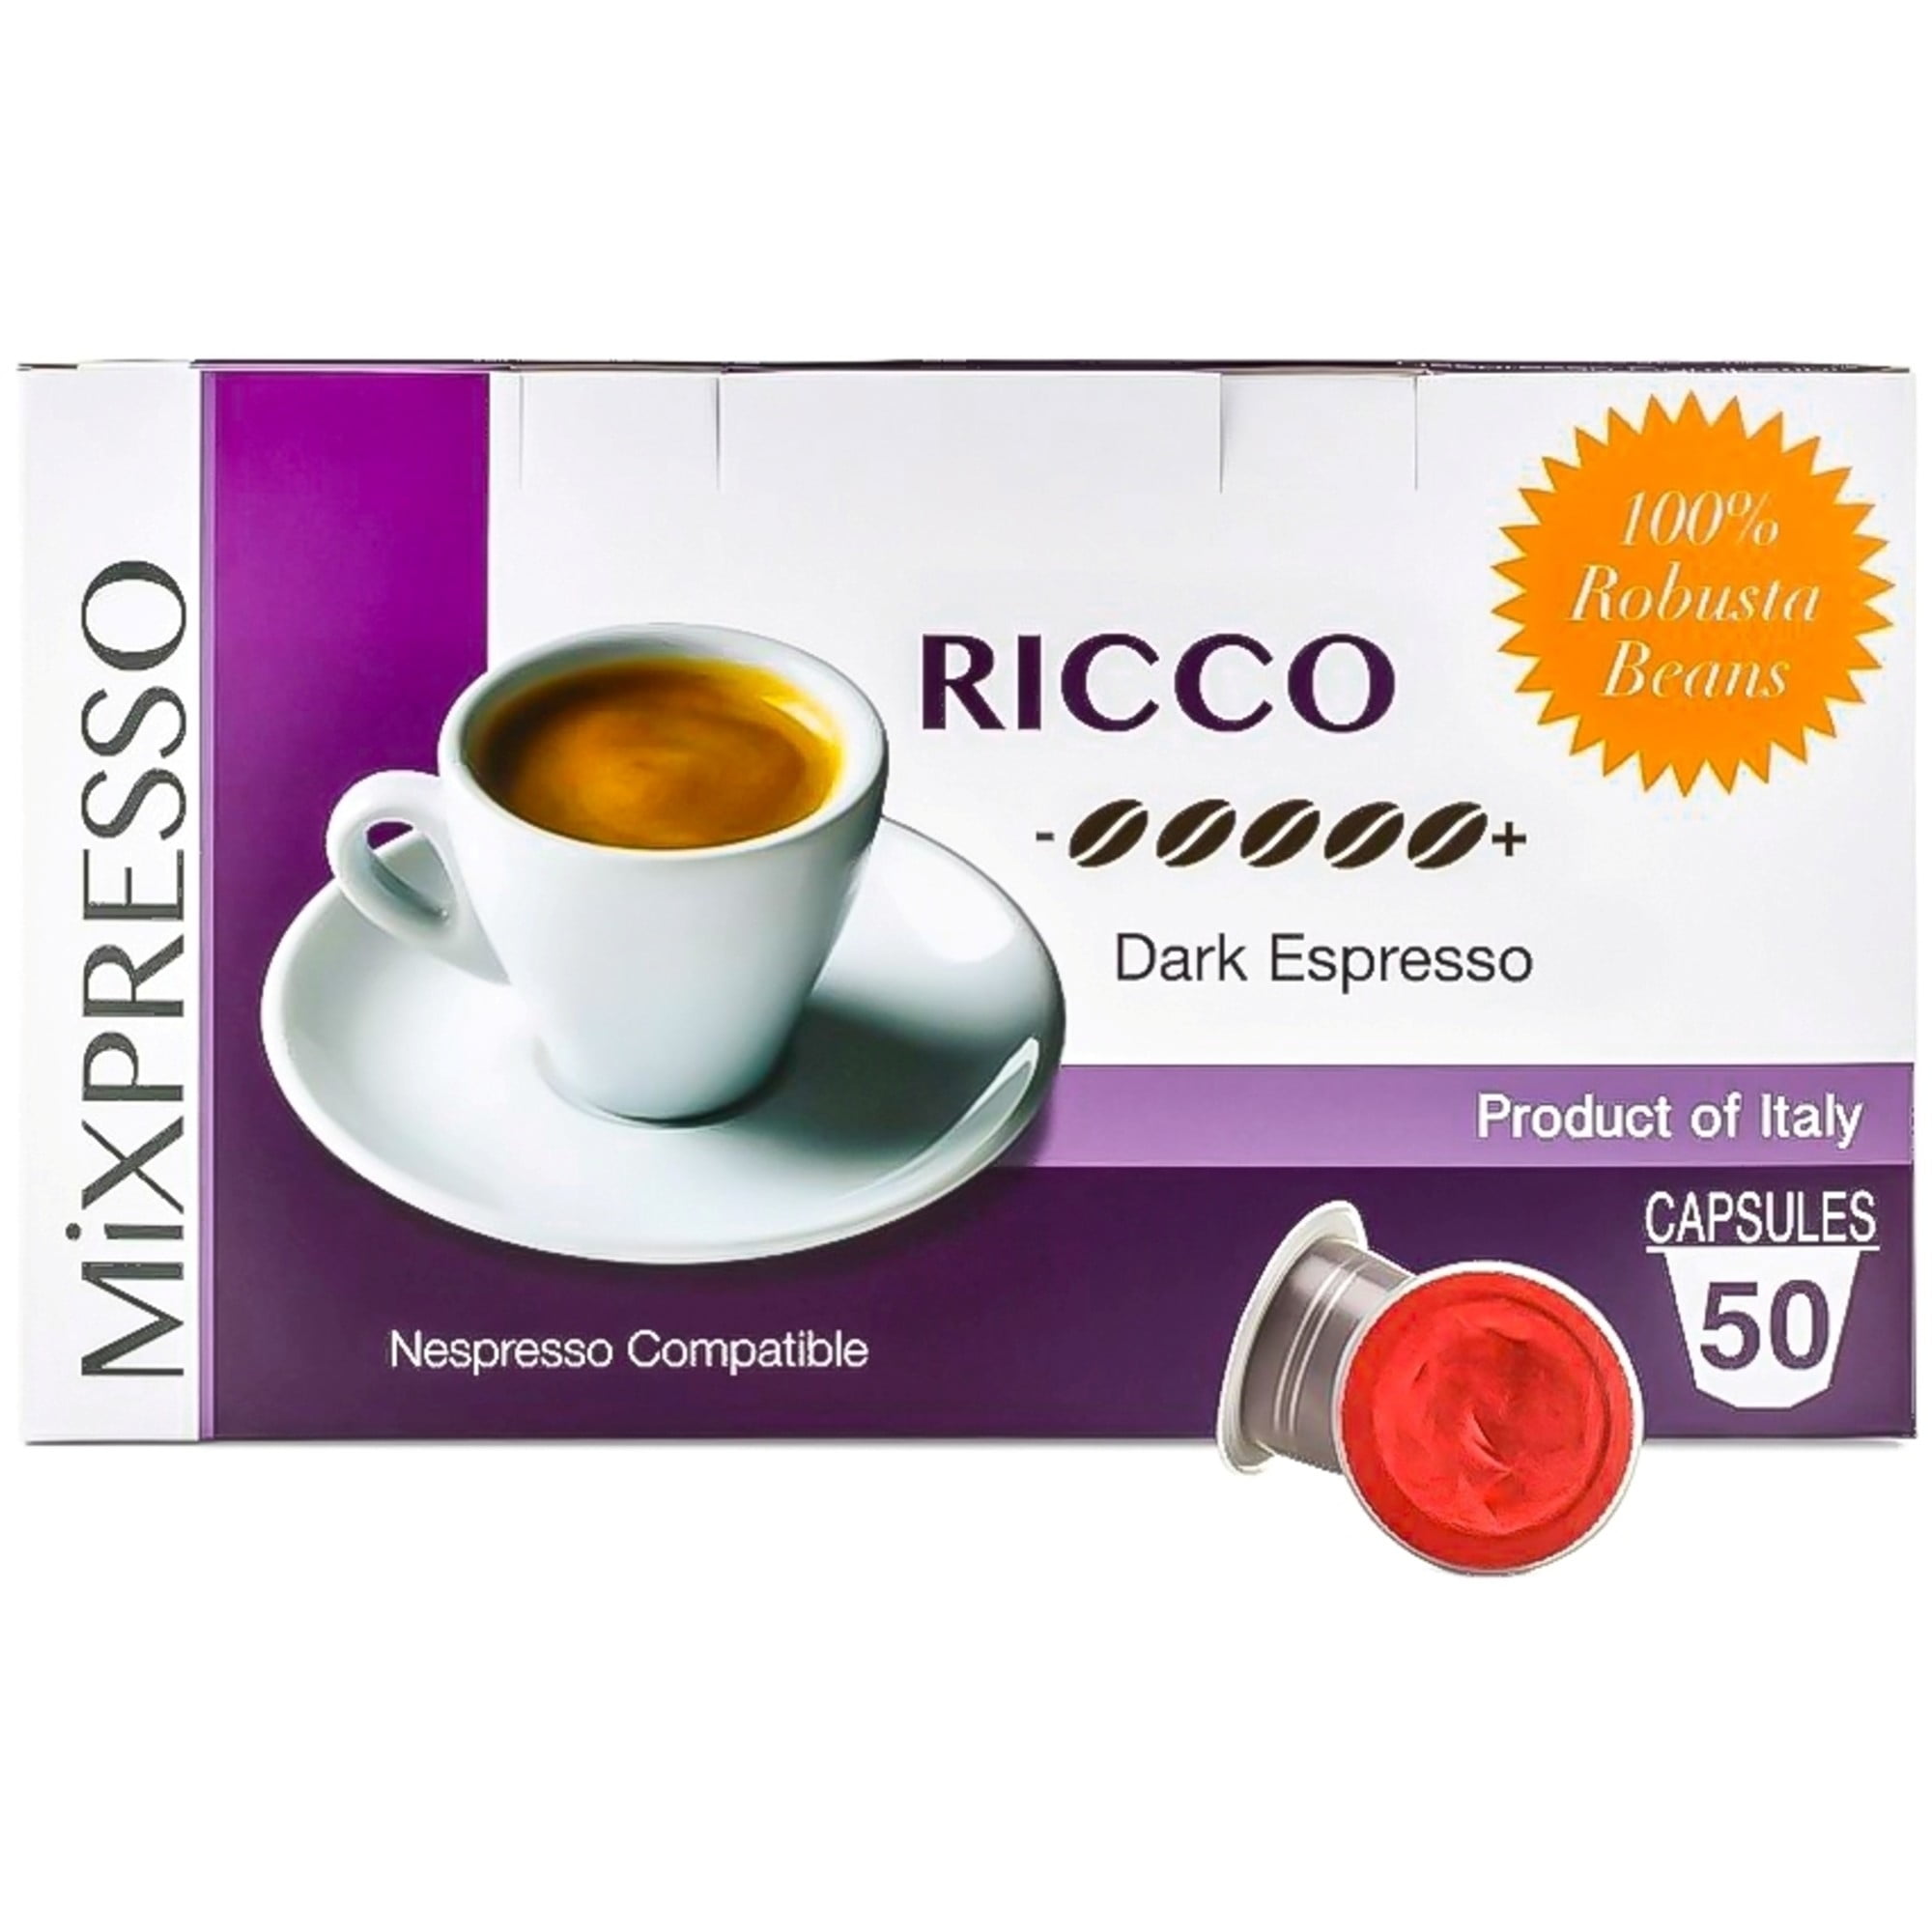 Mixpresso Espresso Machine, Bundle with 50 Coffee Espresso Capsules Brewers  Single Cup Coffee Pods, 100% from Italy Intense Roast Espresso, Premium